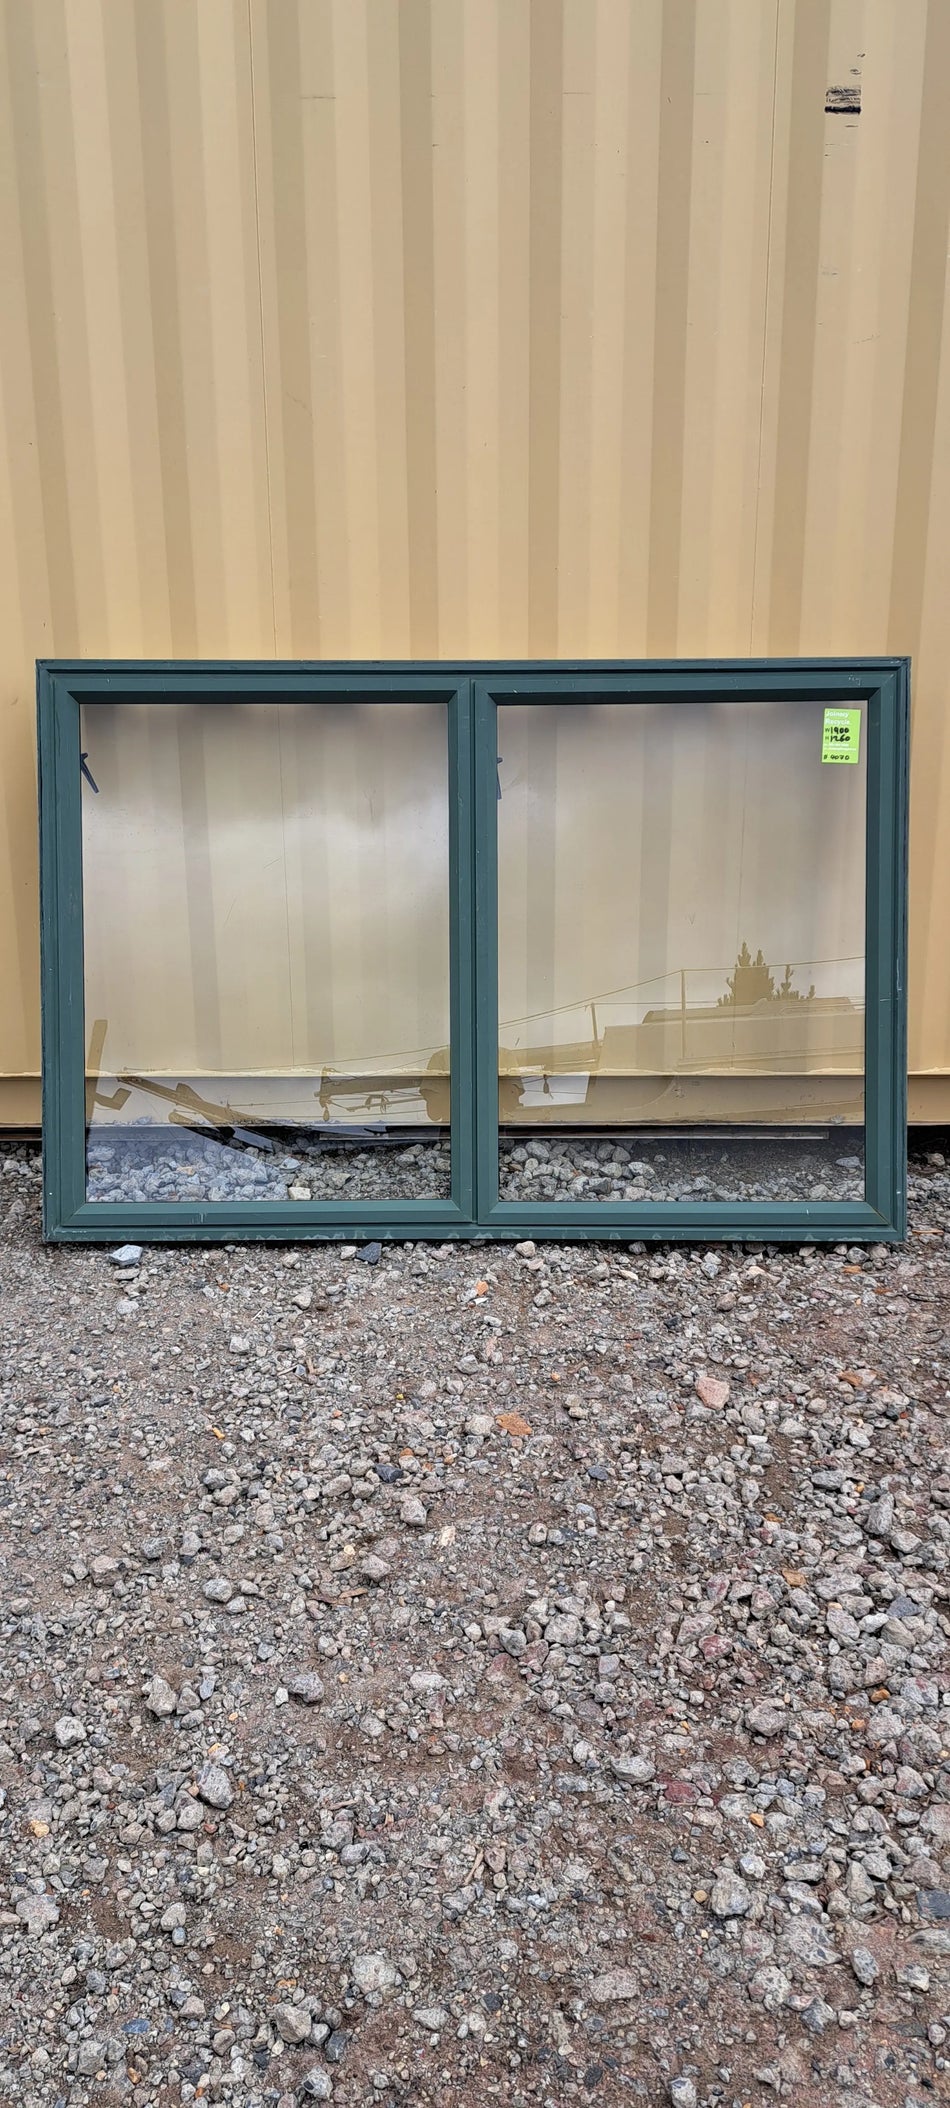 Green Aluminium Window 1900 W x 1260 H [#4070aSF] Joinery Recycle